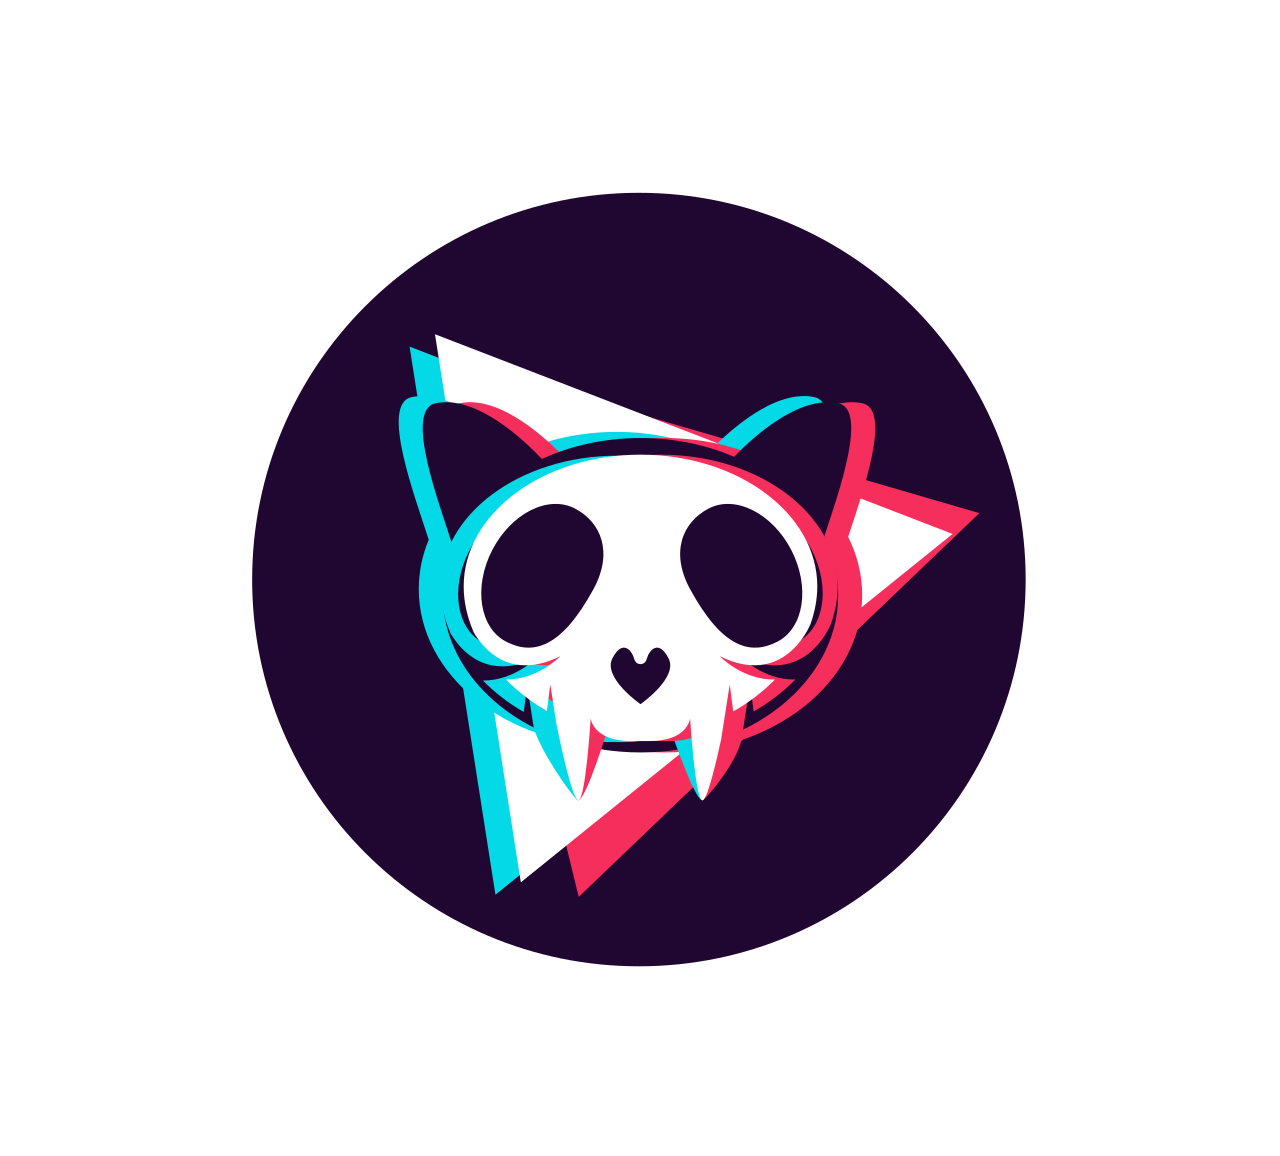 MINERS CAT GEMS's logo